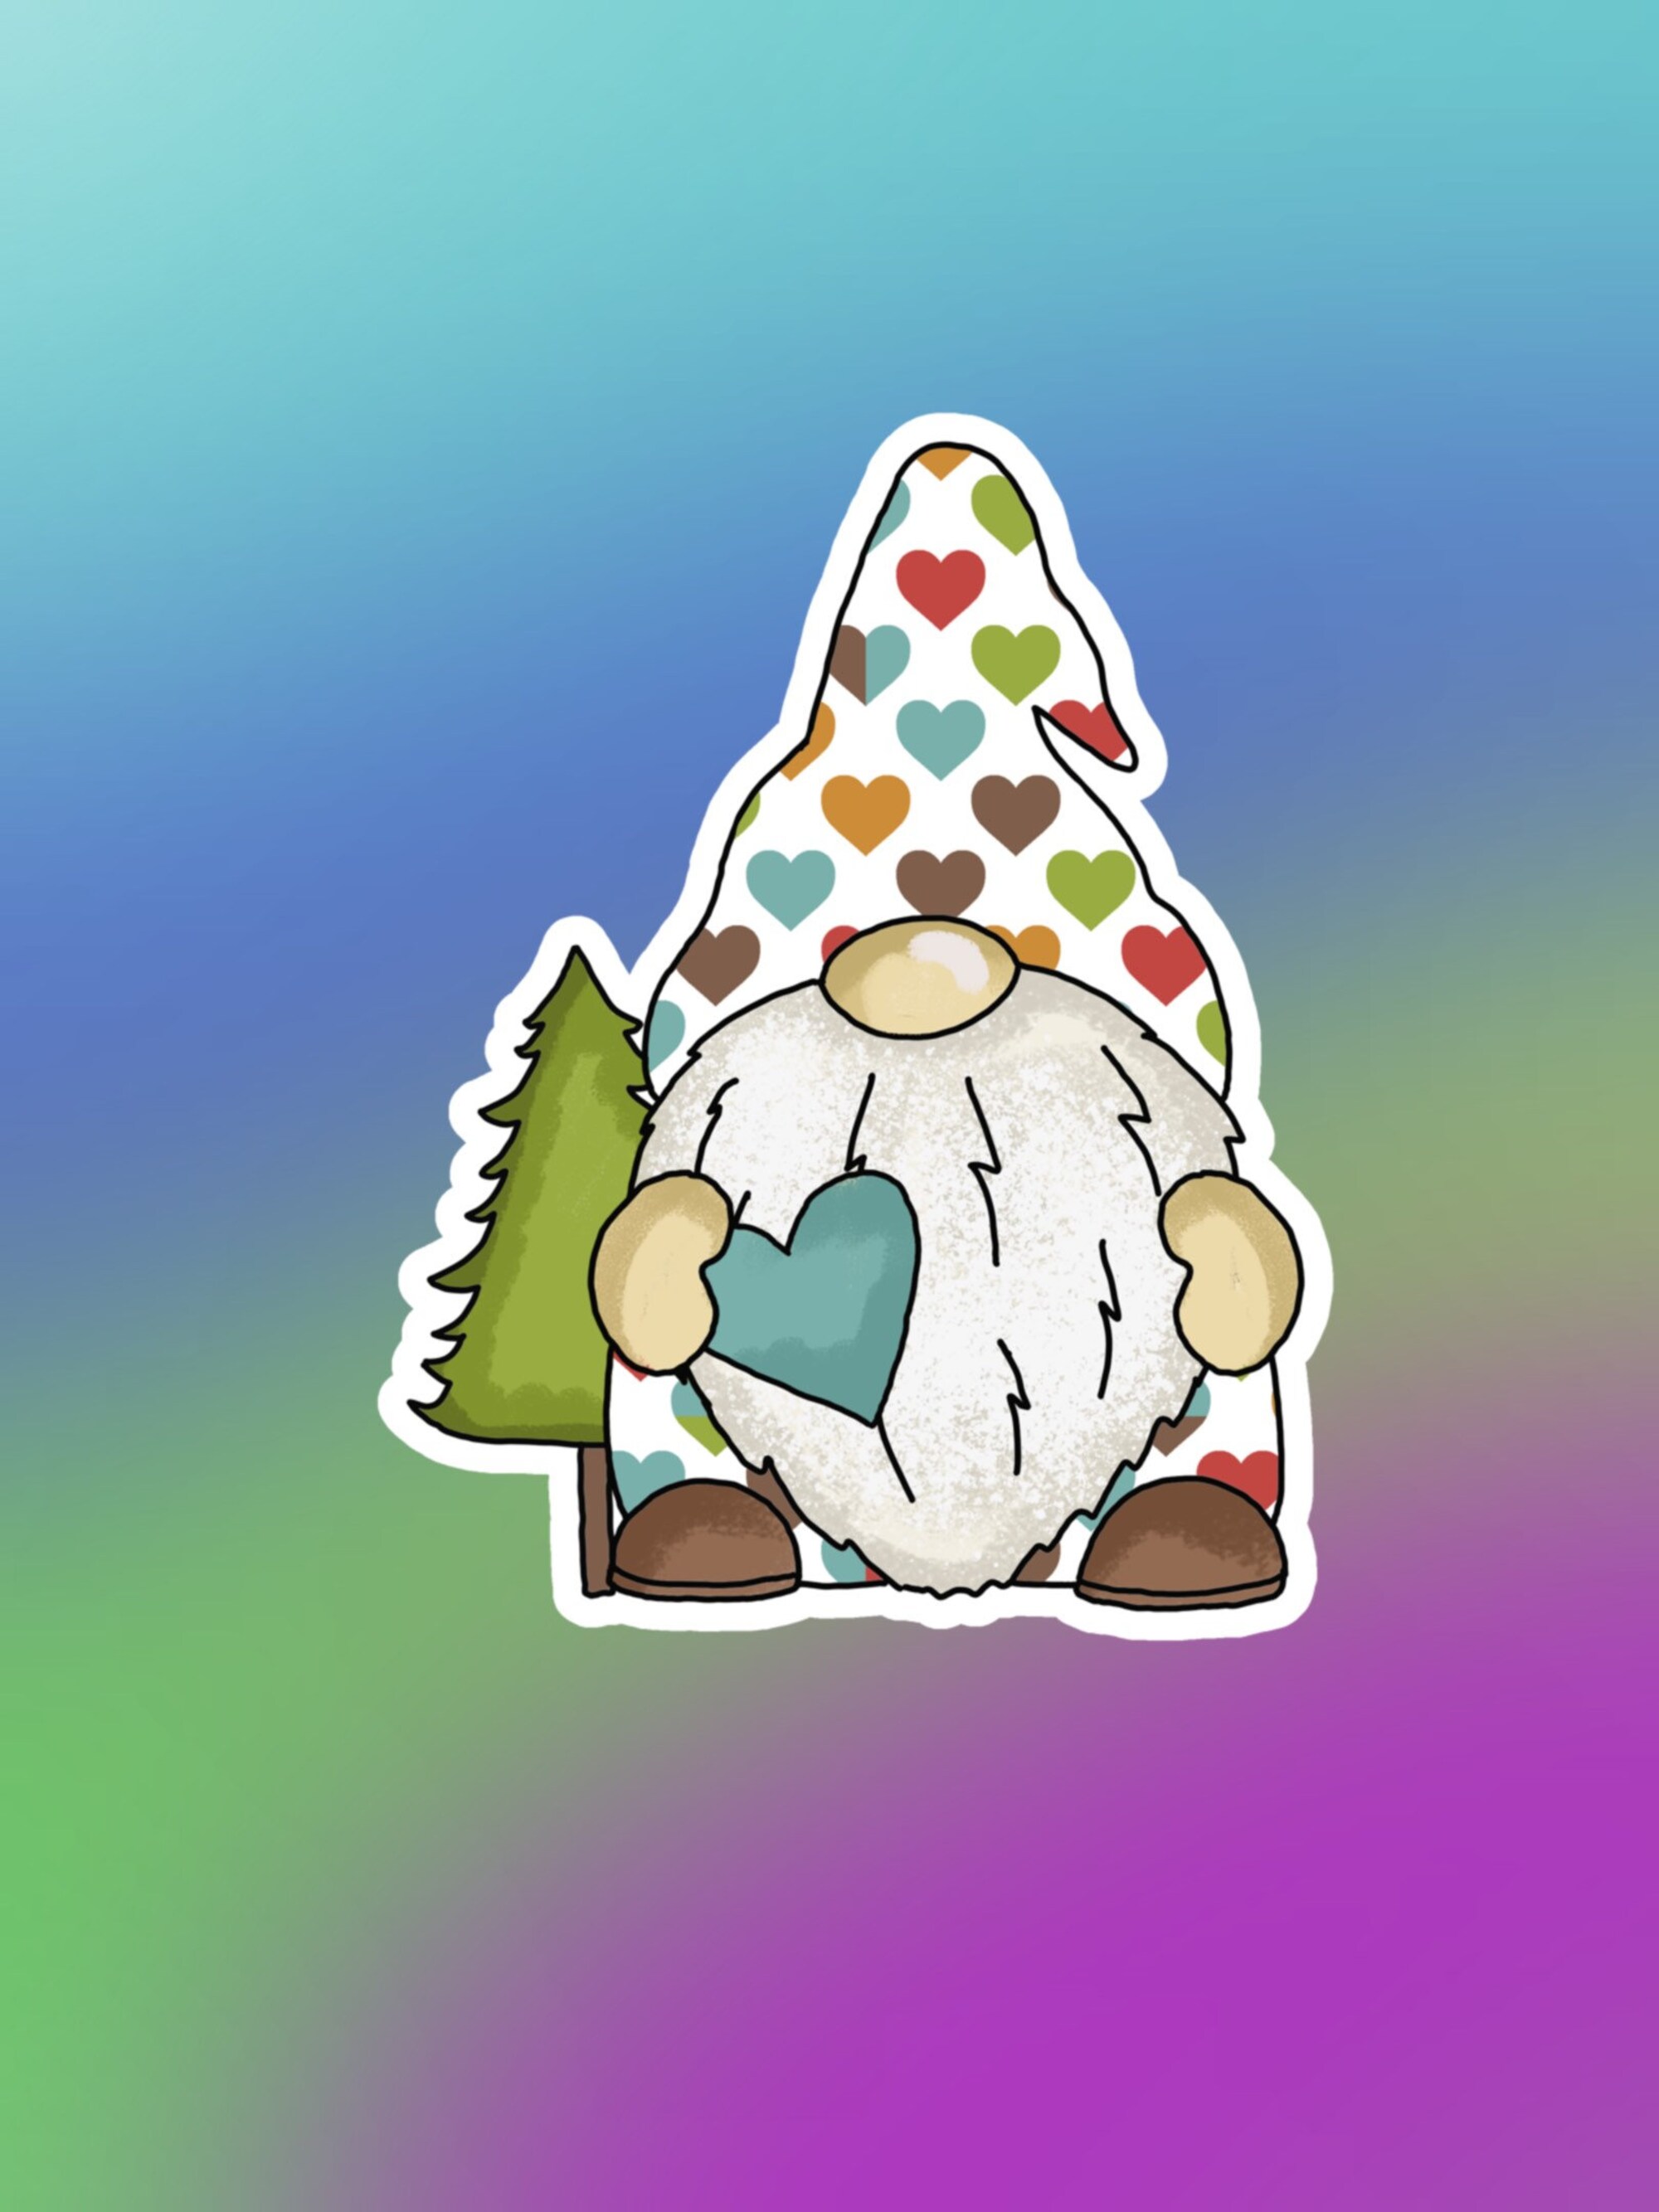 Cute Gnome Sticker, Waterproof Sticker